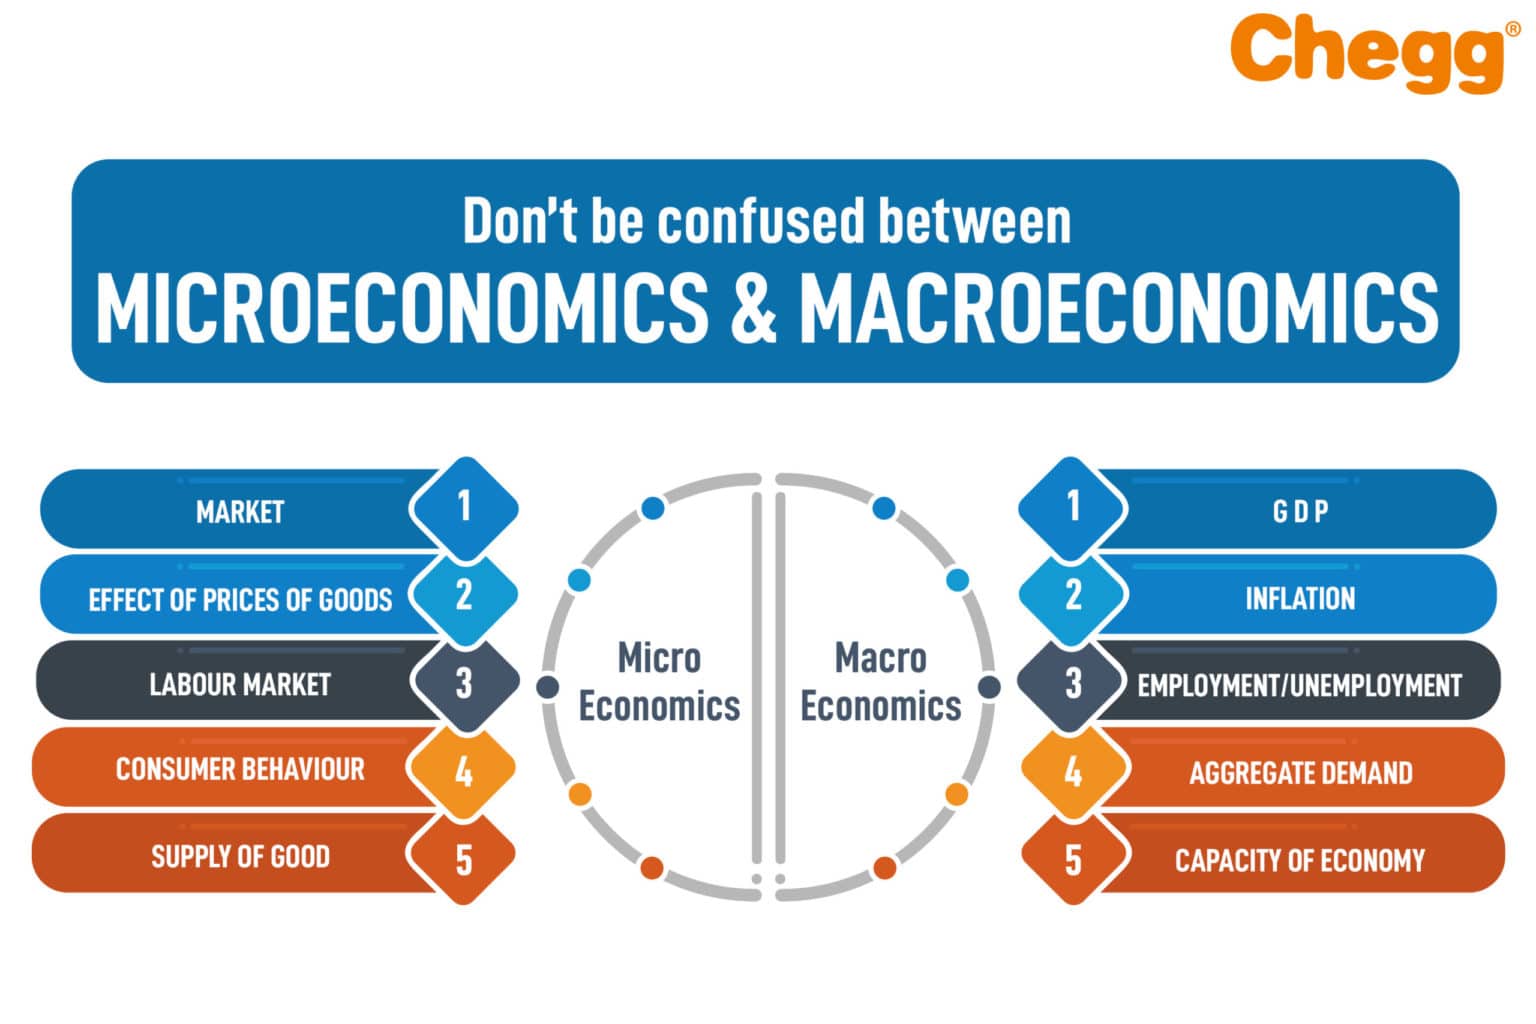 macro vs micro